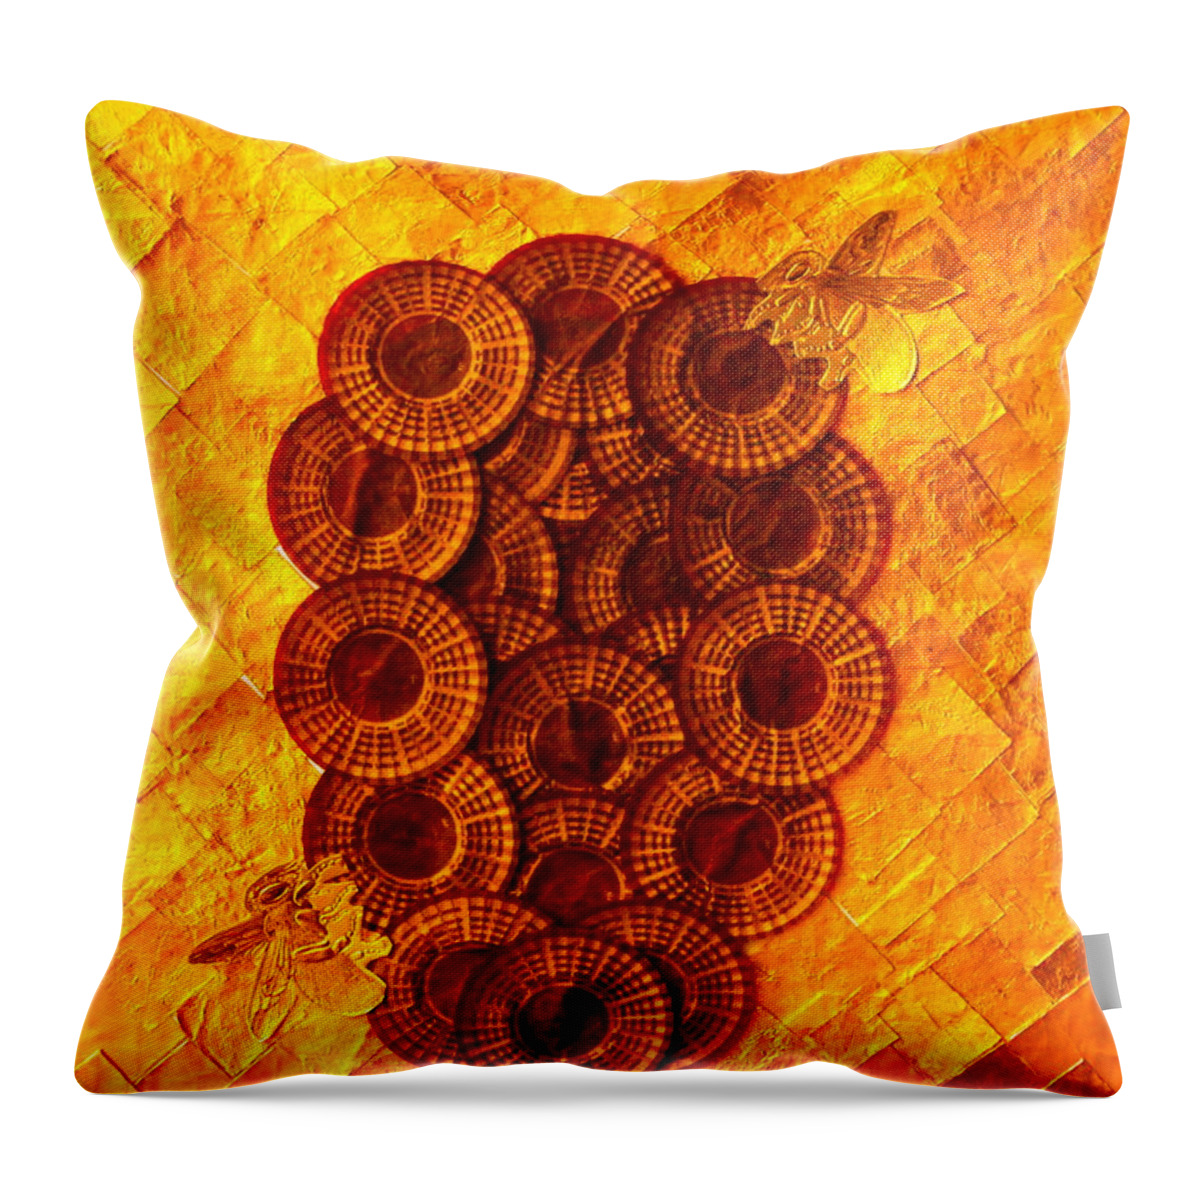 Apparel Throw Pillow featuring the digital art Honeybee 2 by Lorna Maza